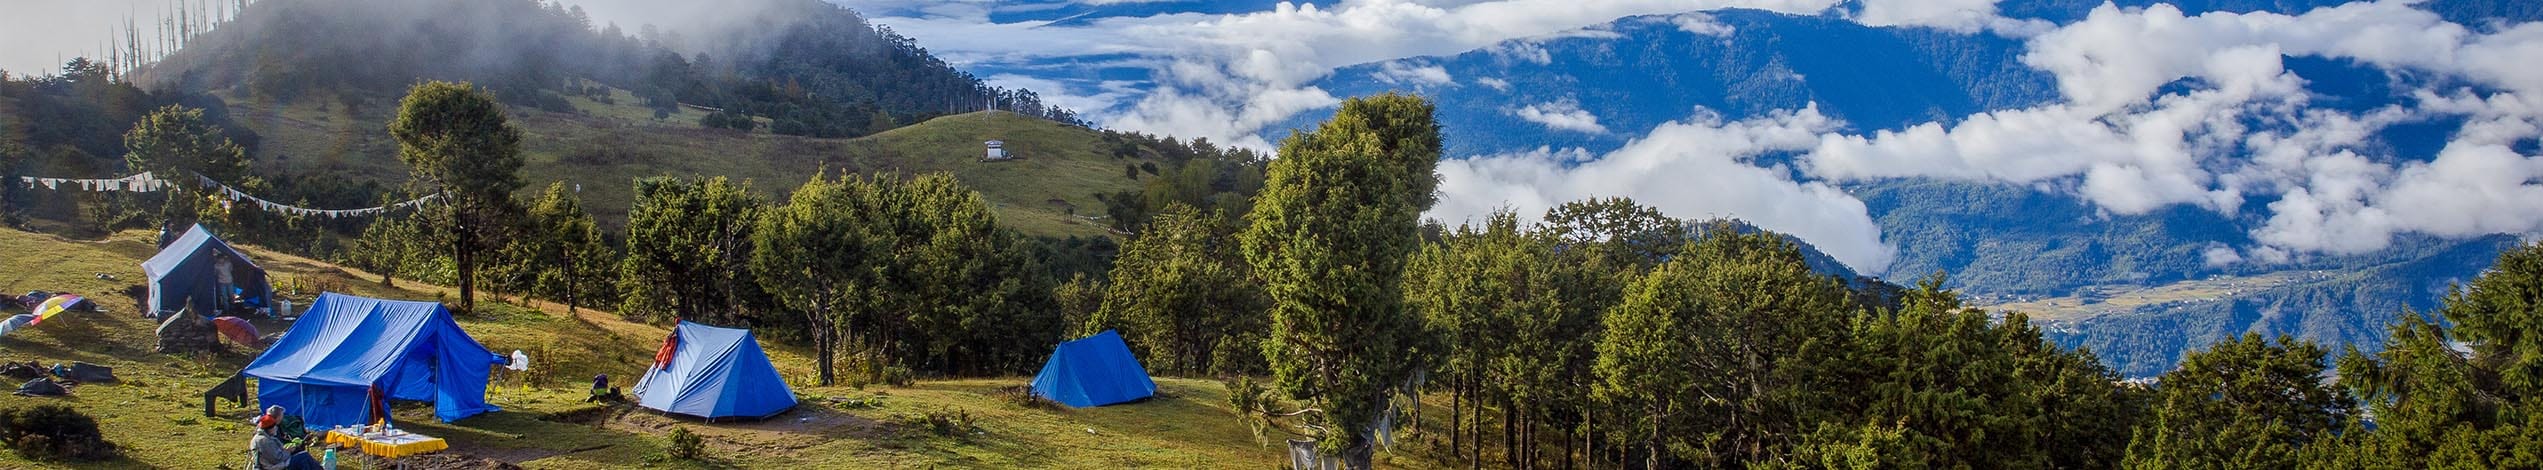 Campground i Himalaya, Bhutan